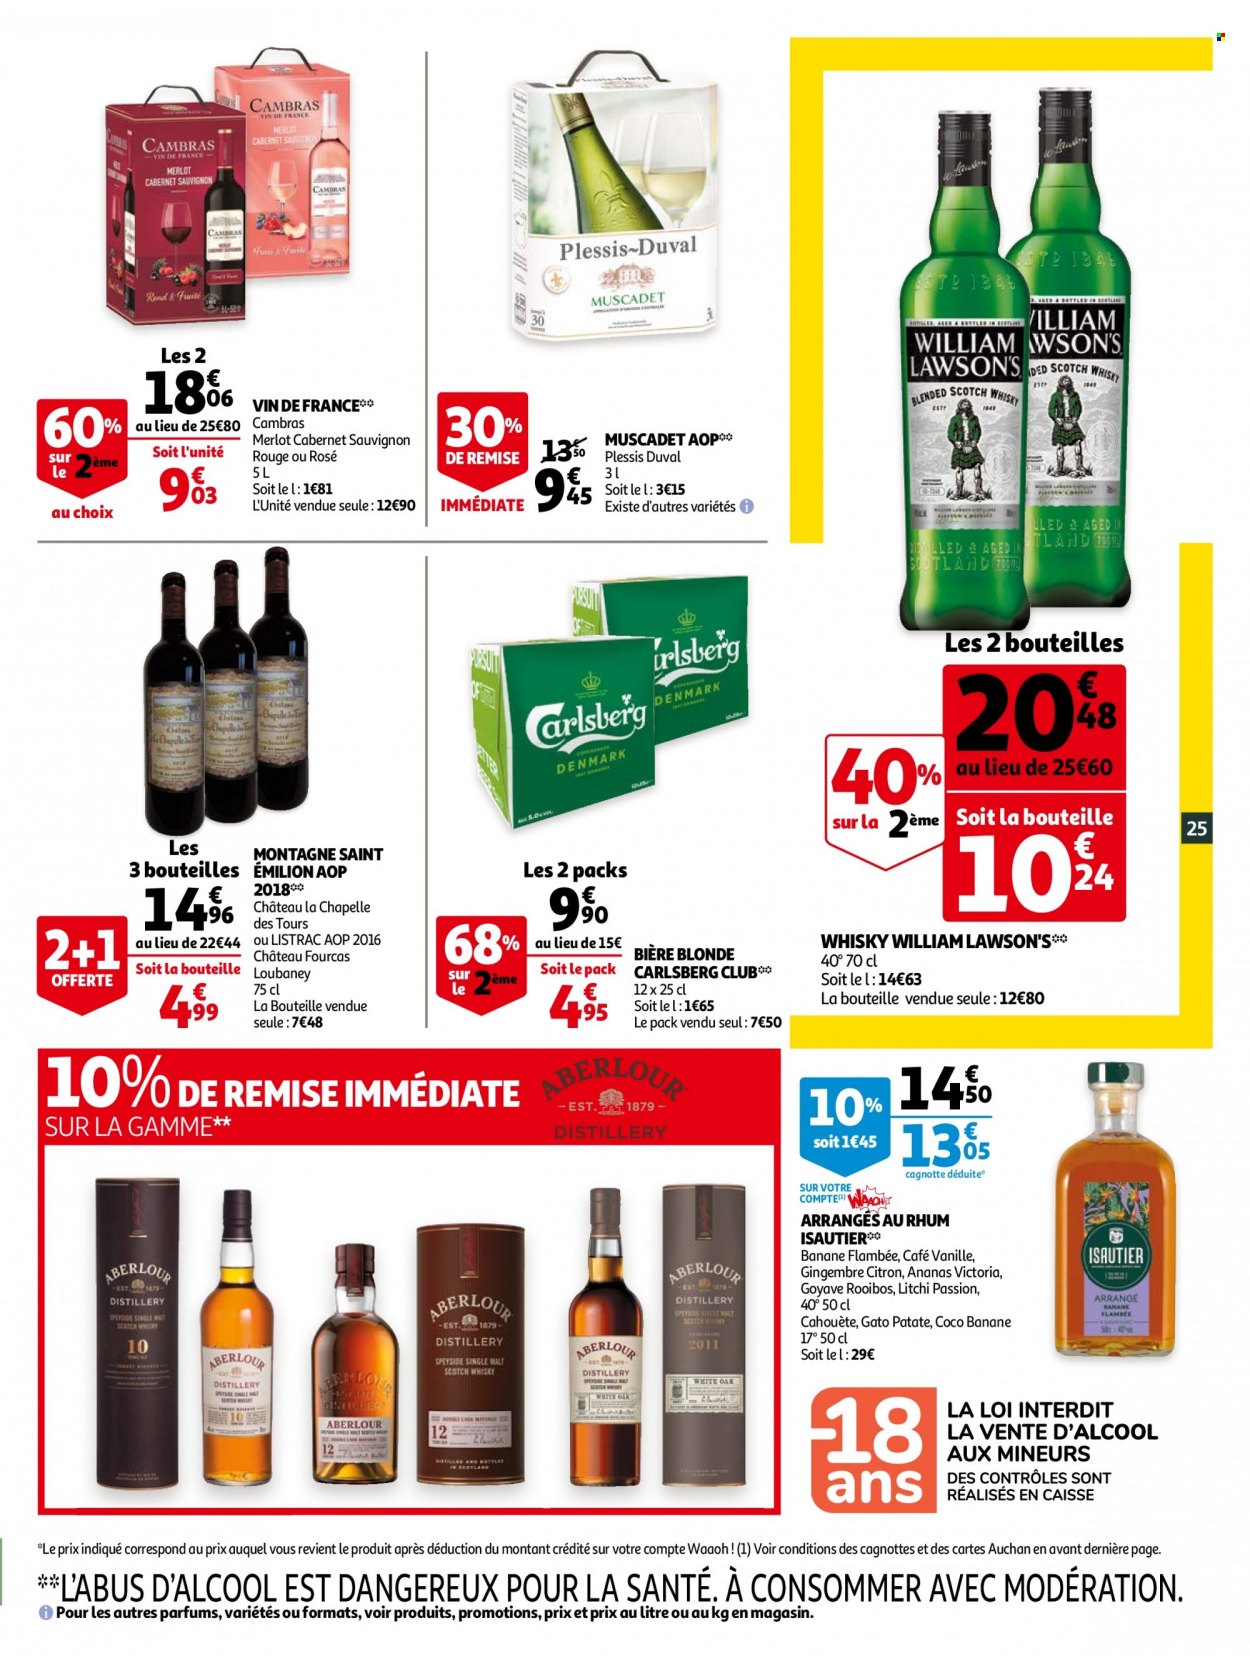 Catalogue Auchan - 15.09.2021 - 21.09.2021. 